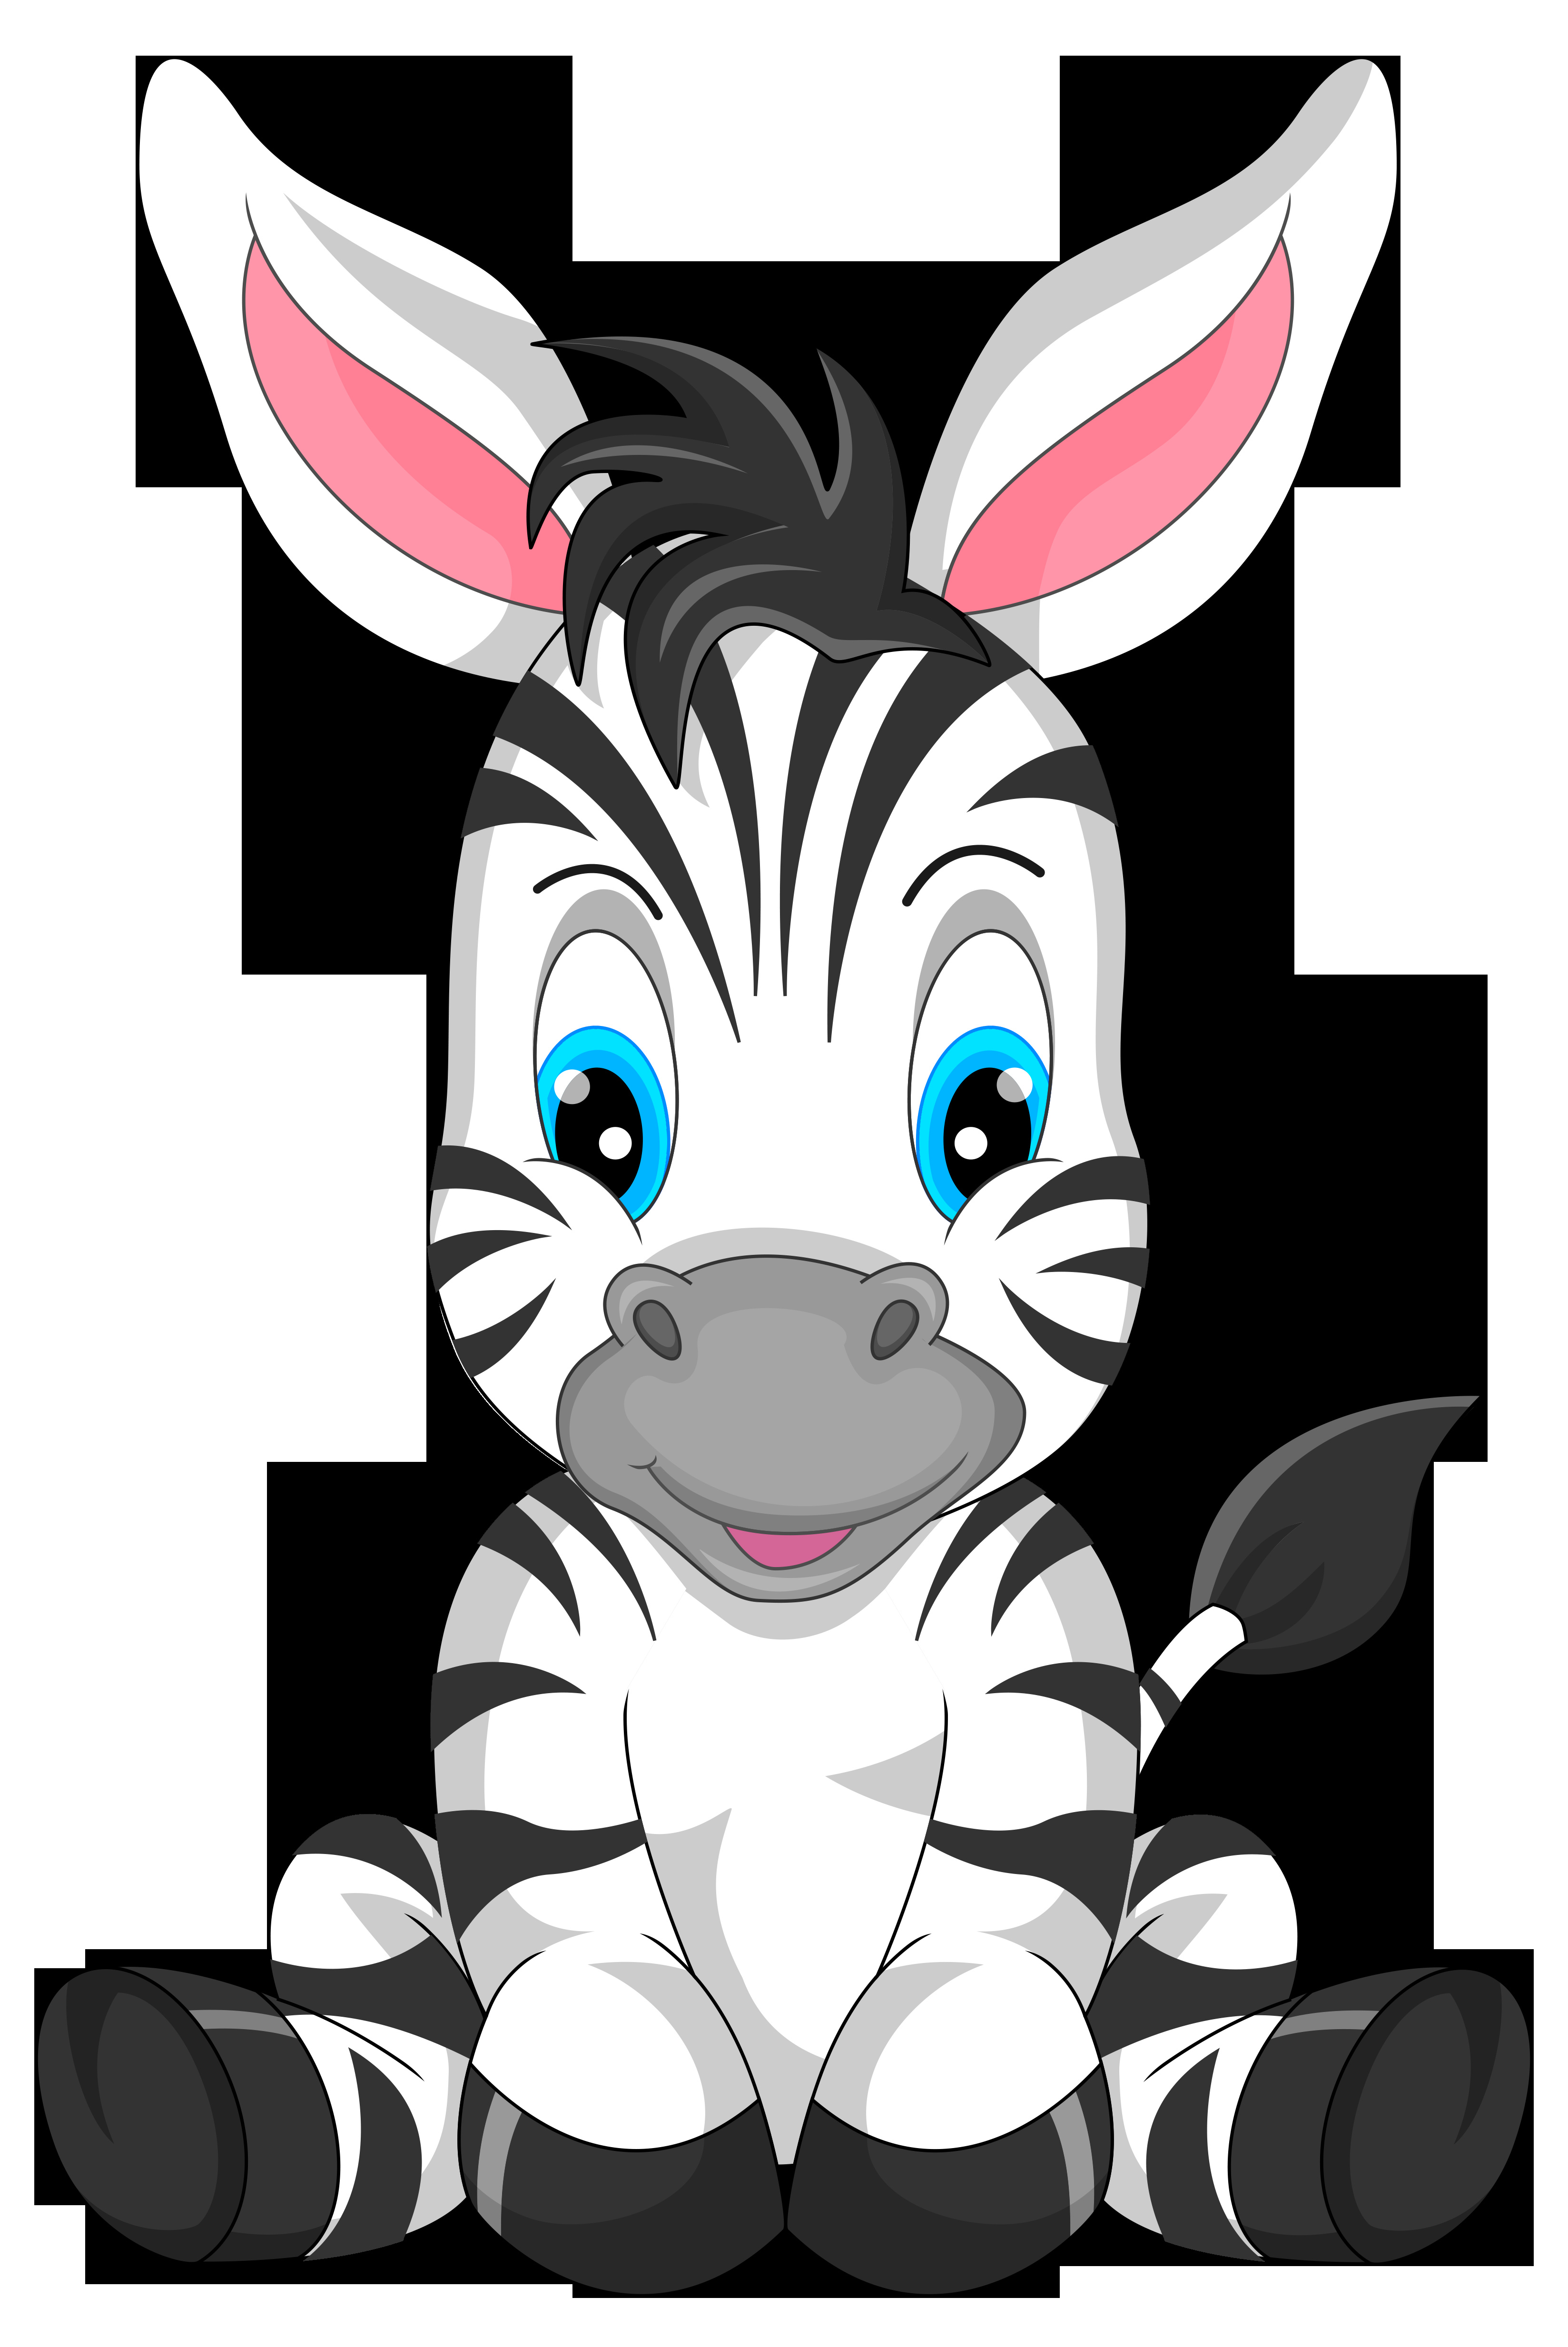 Cute Zebra Cartoon PNG Clipart Image